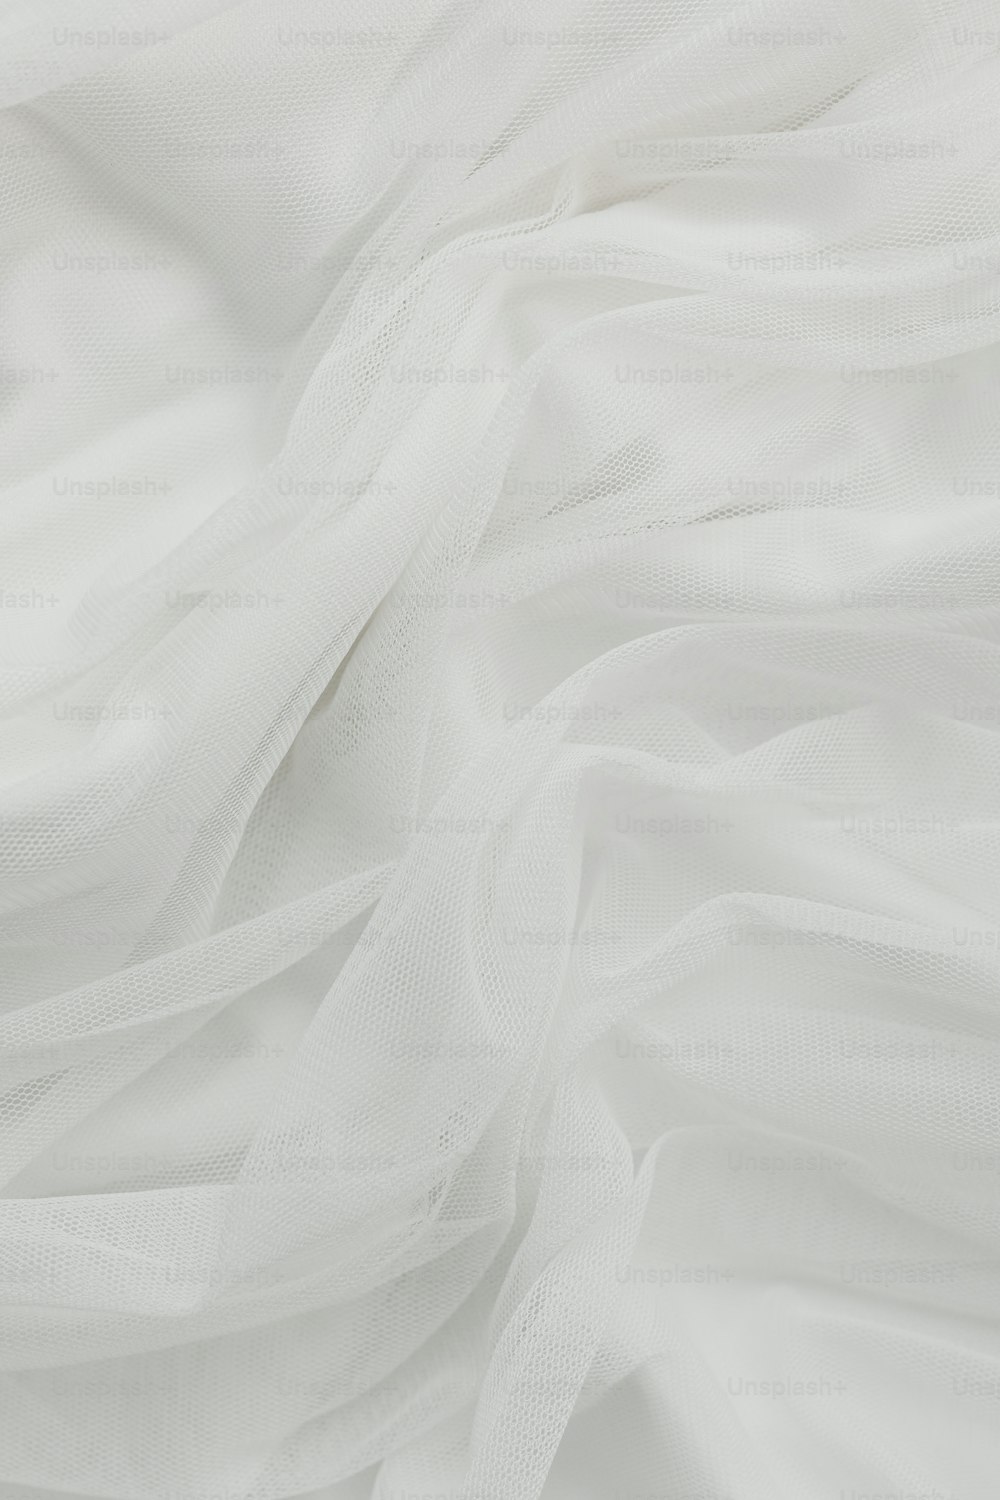 Vue rapprochée d’un tissu blanc